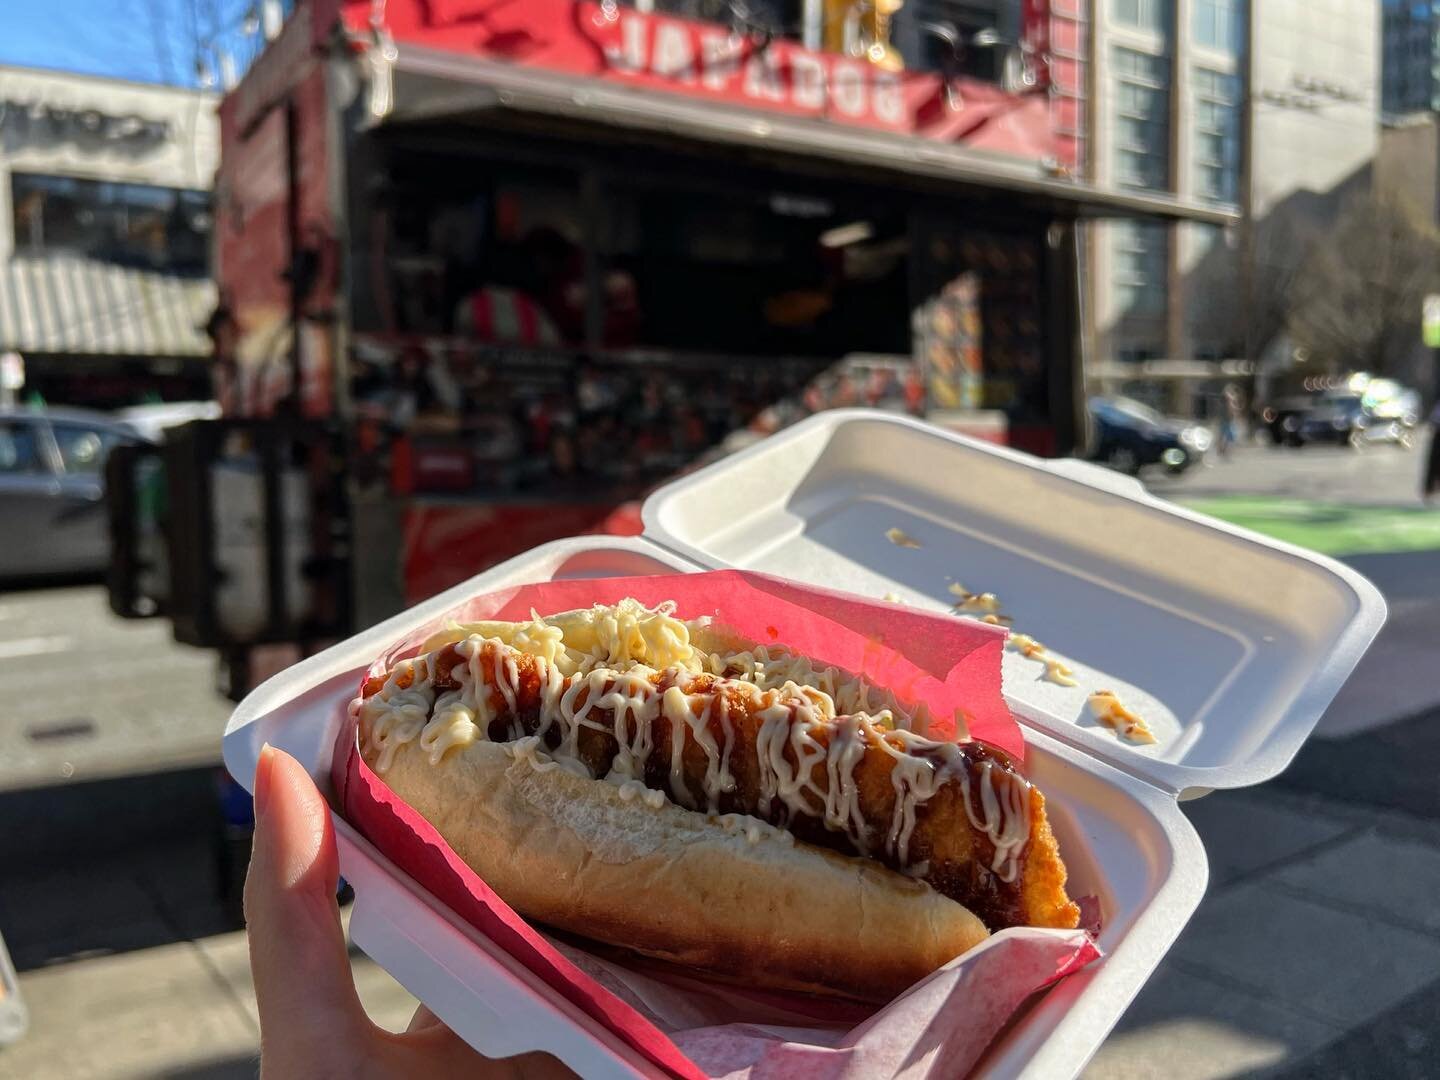 Finally ate my first Japadog 😋 

#postcardfrom #vancouver #hotdogstand #yum #travel